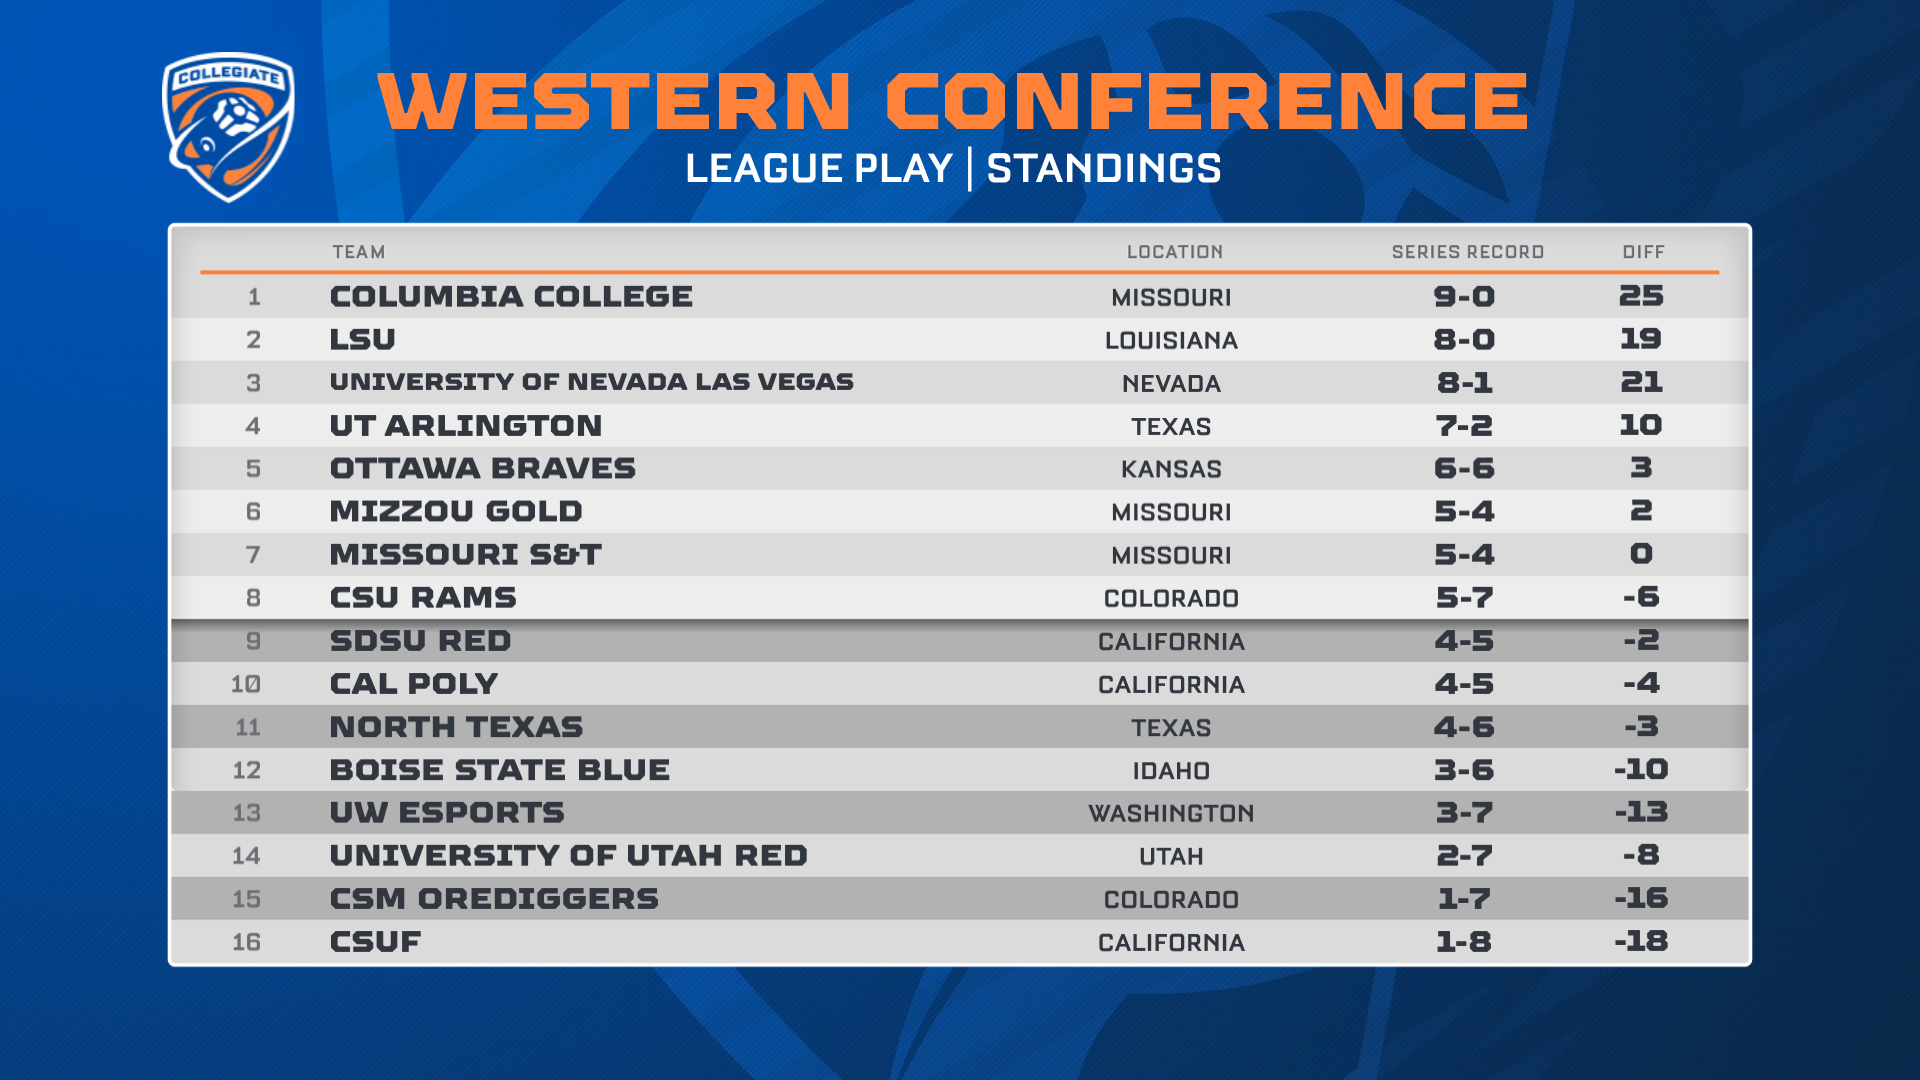 Western Conference Week 3 League Play Standings